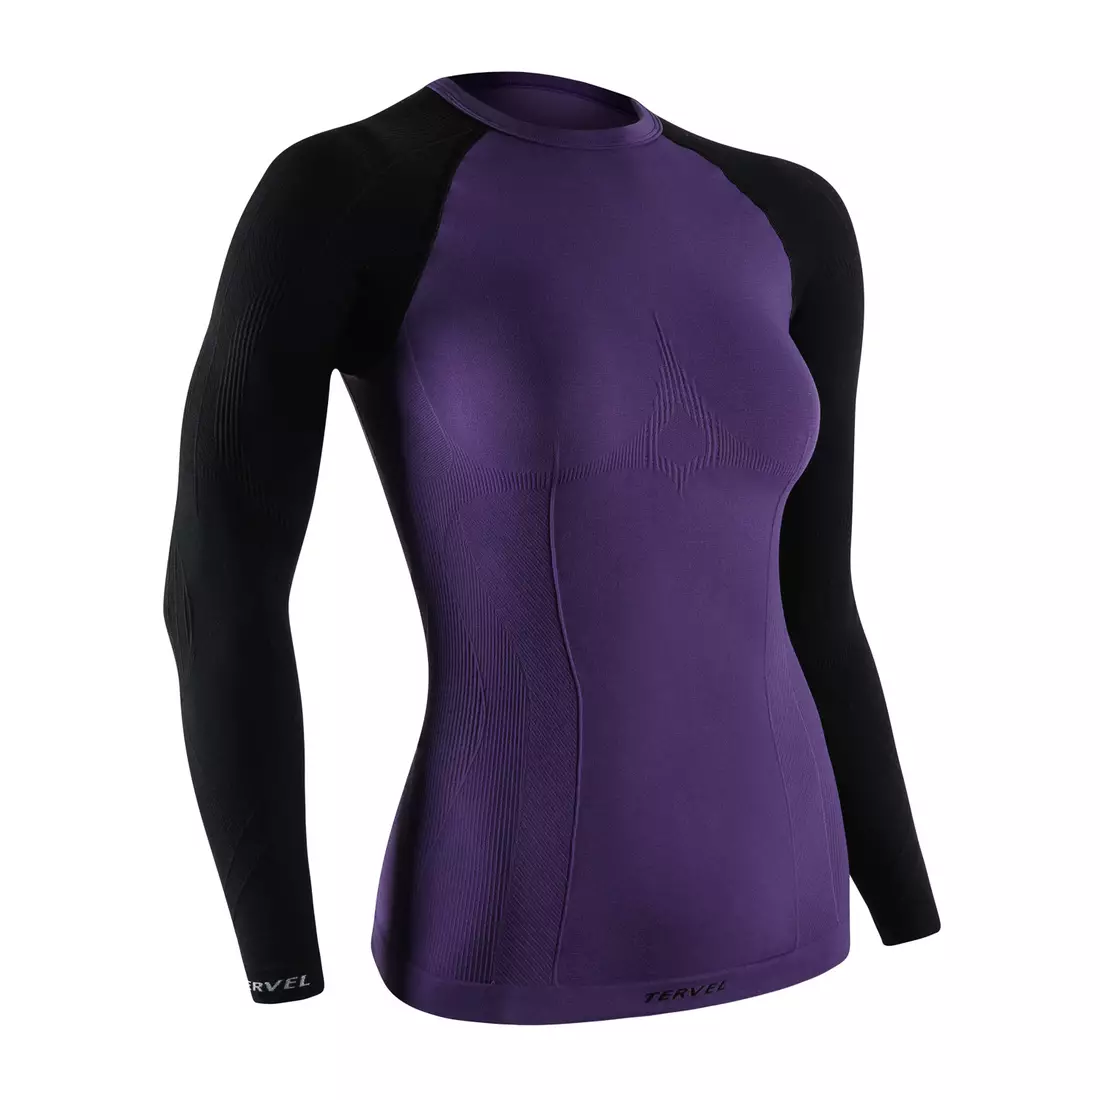 TERVEL COMFORTLINE 2002 - tricou termic dama, maneca lunga, culoare: violet (liliac)-negru